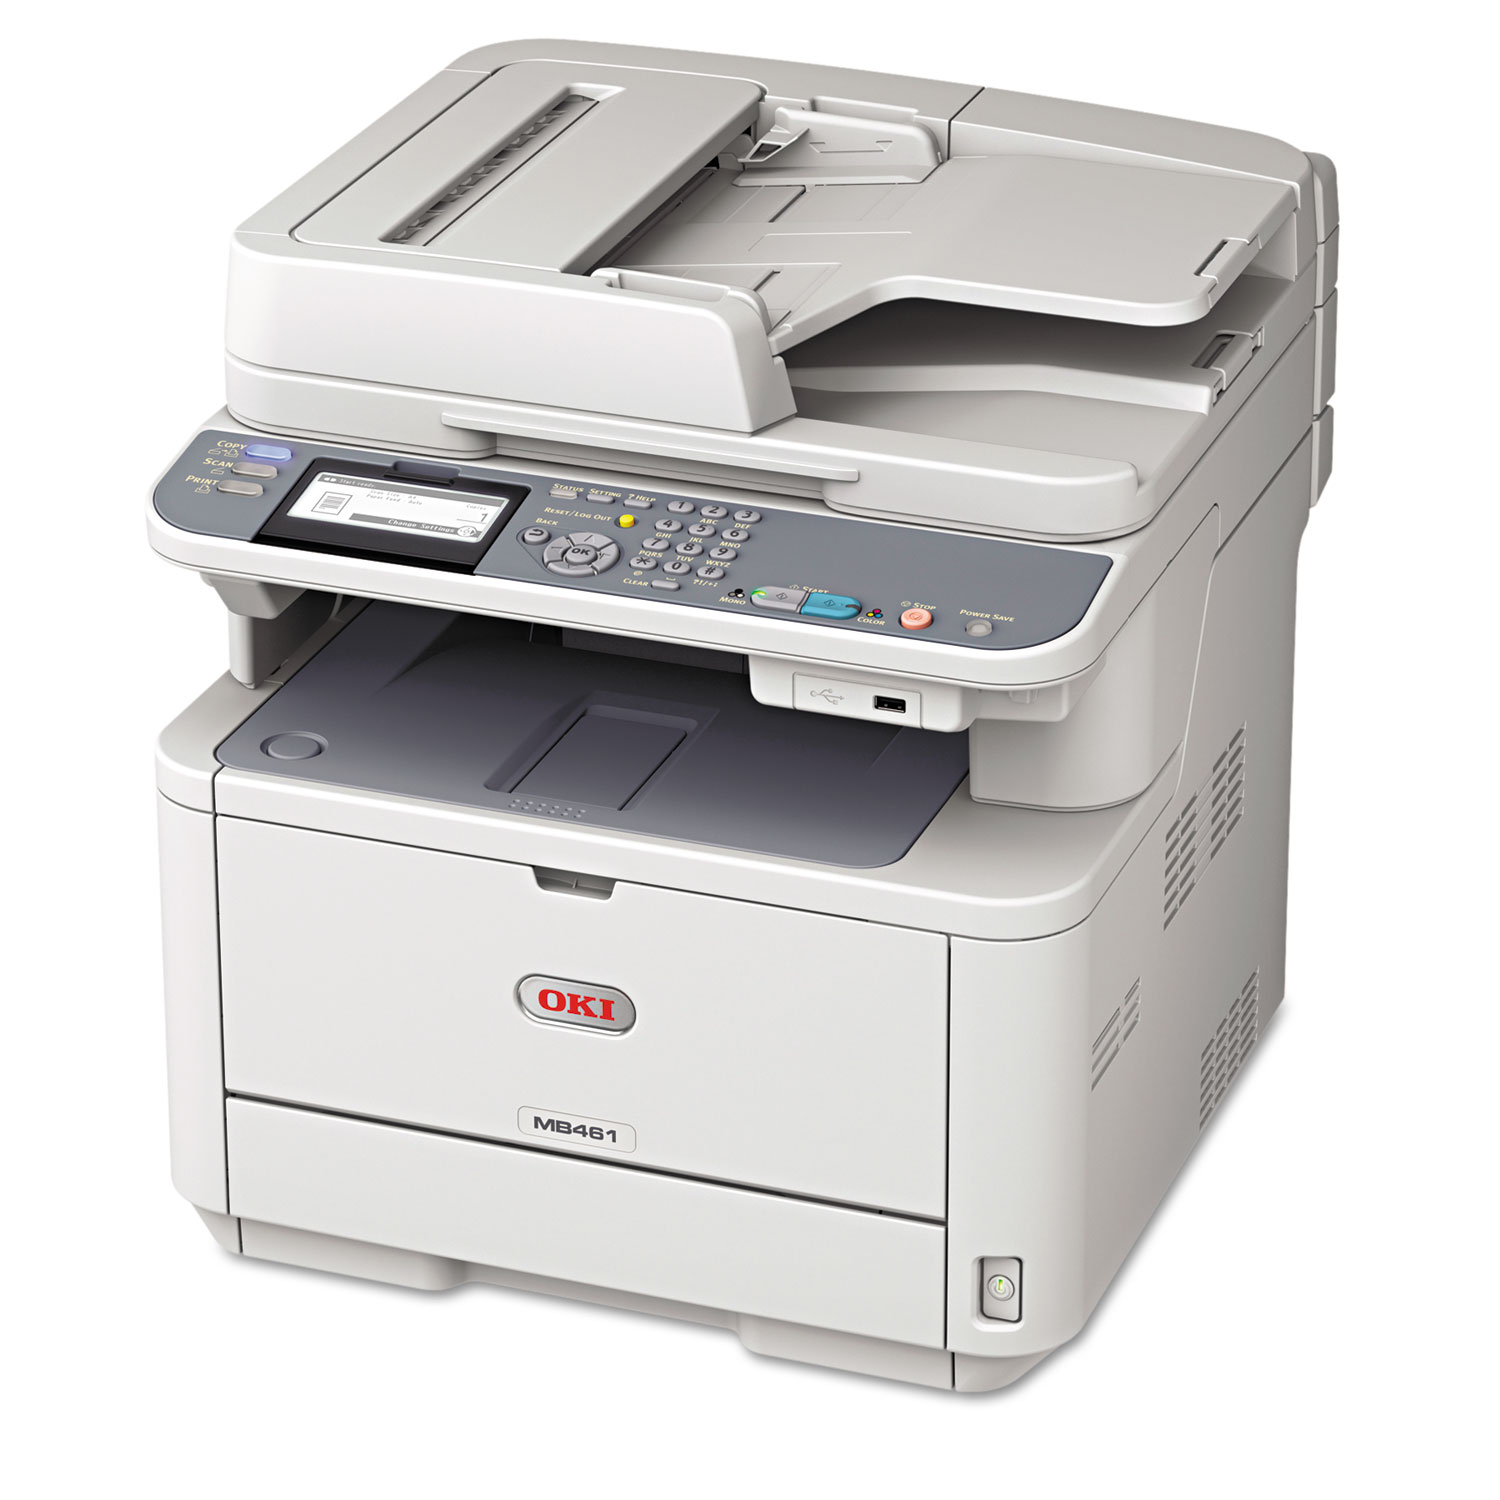 MB461 MFP Multifunction Laser Printer, Copy/Print/Scan